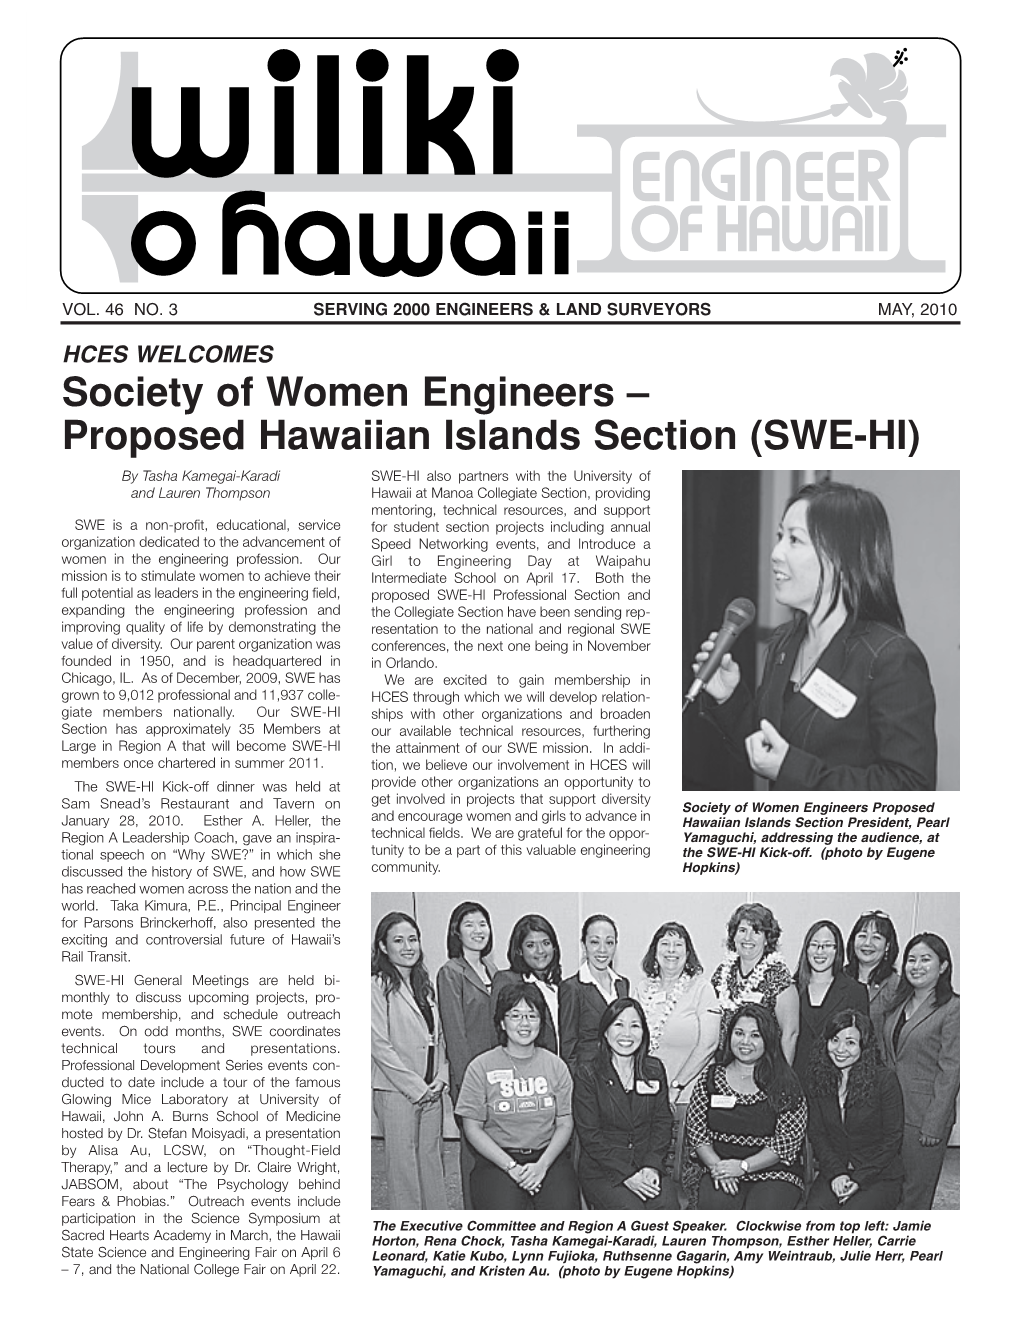 Society of Women Engineers – Proposed Hawaiian Islands Section (SWE-HI)